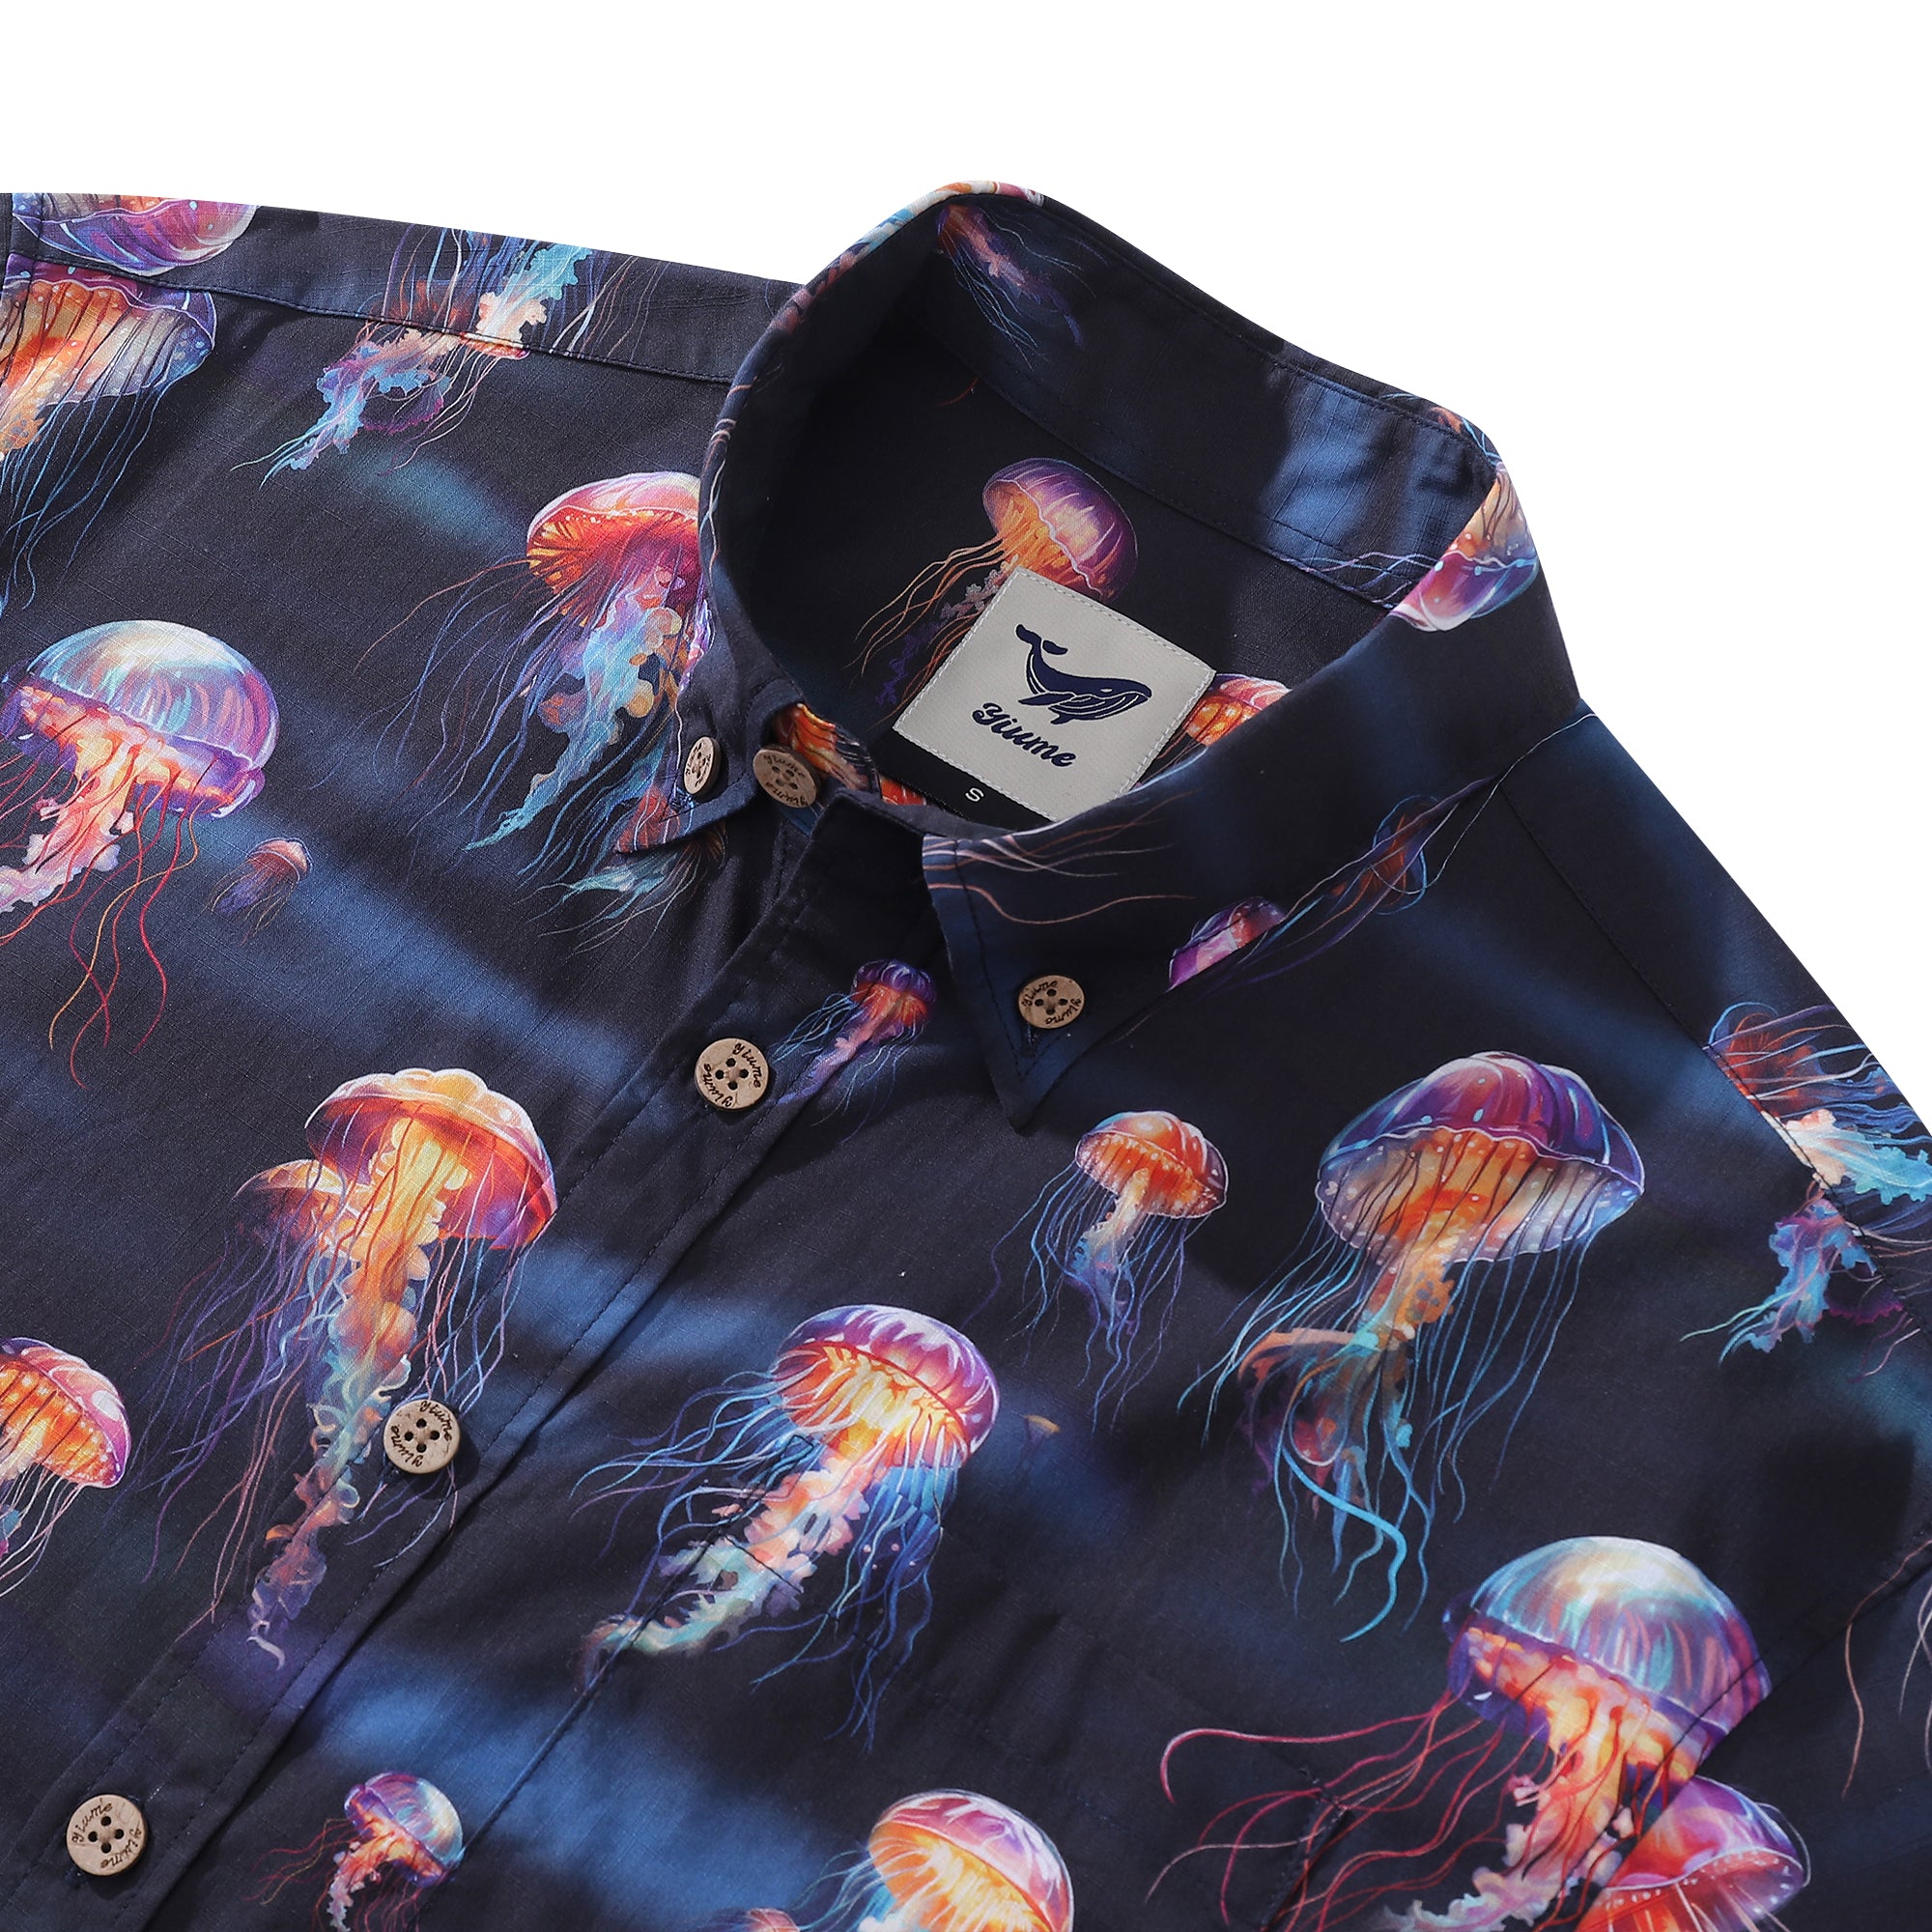 Men's Ocean Hawaiian Short Sleeve Cotton Resort Wear Shirt Jellyfish Print